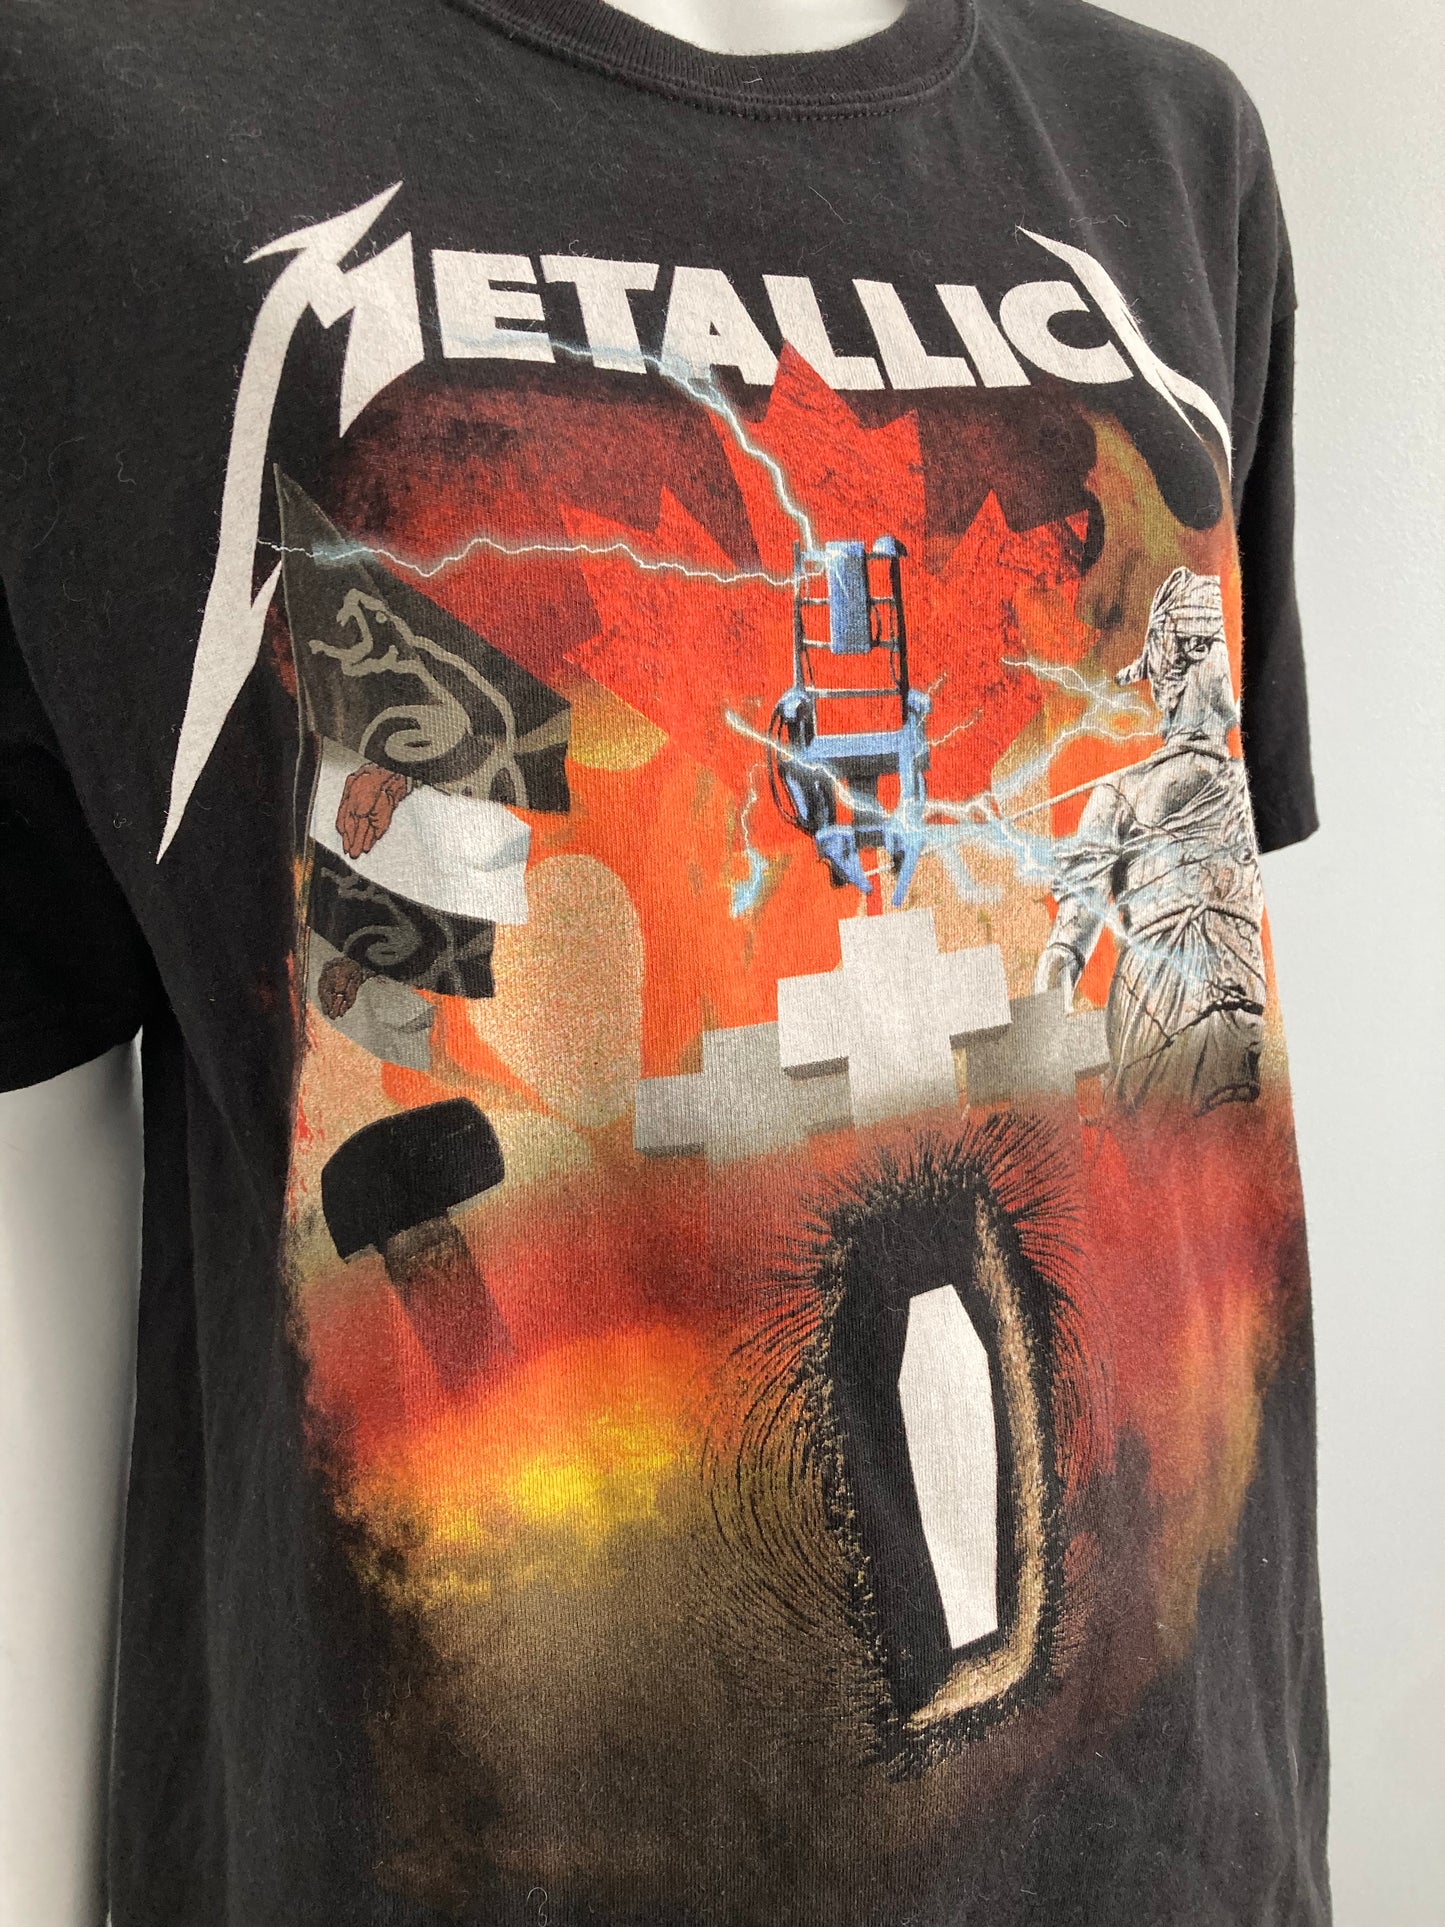 Metallica Rock Band T Shirt, The Full Arsenal Tour 2012